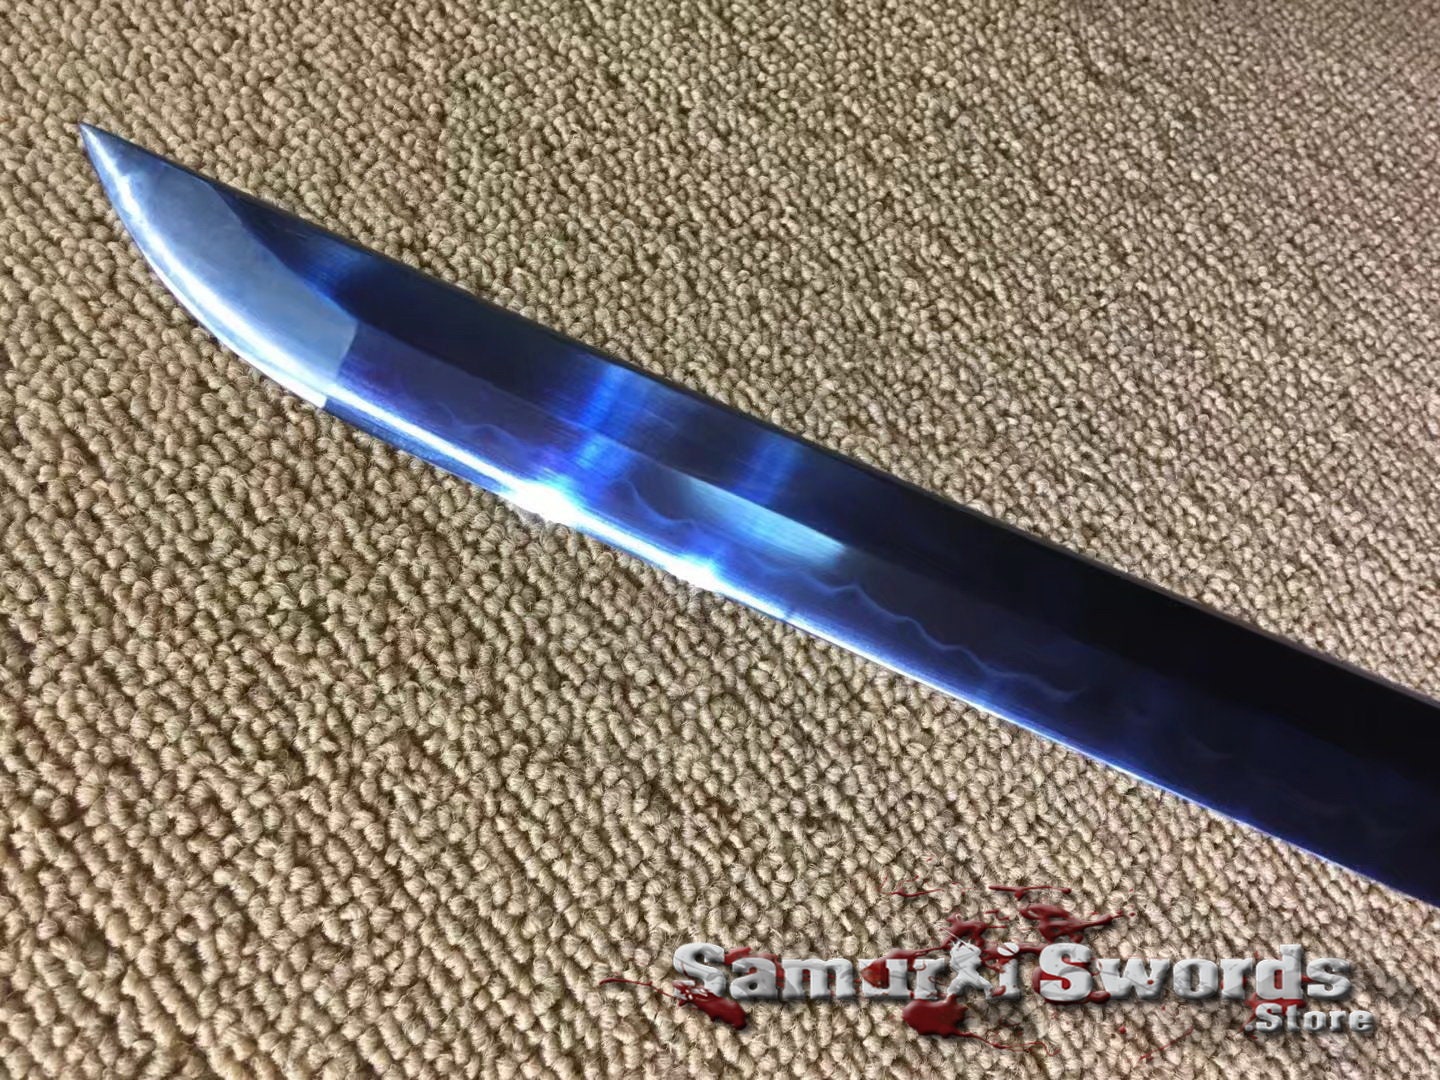 MOTU 200x Samurai Battle Cat SWORD catana original replacement weapon  accessory